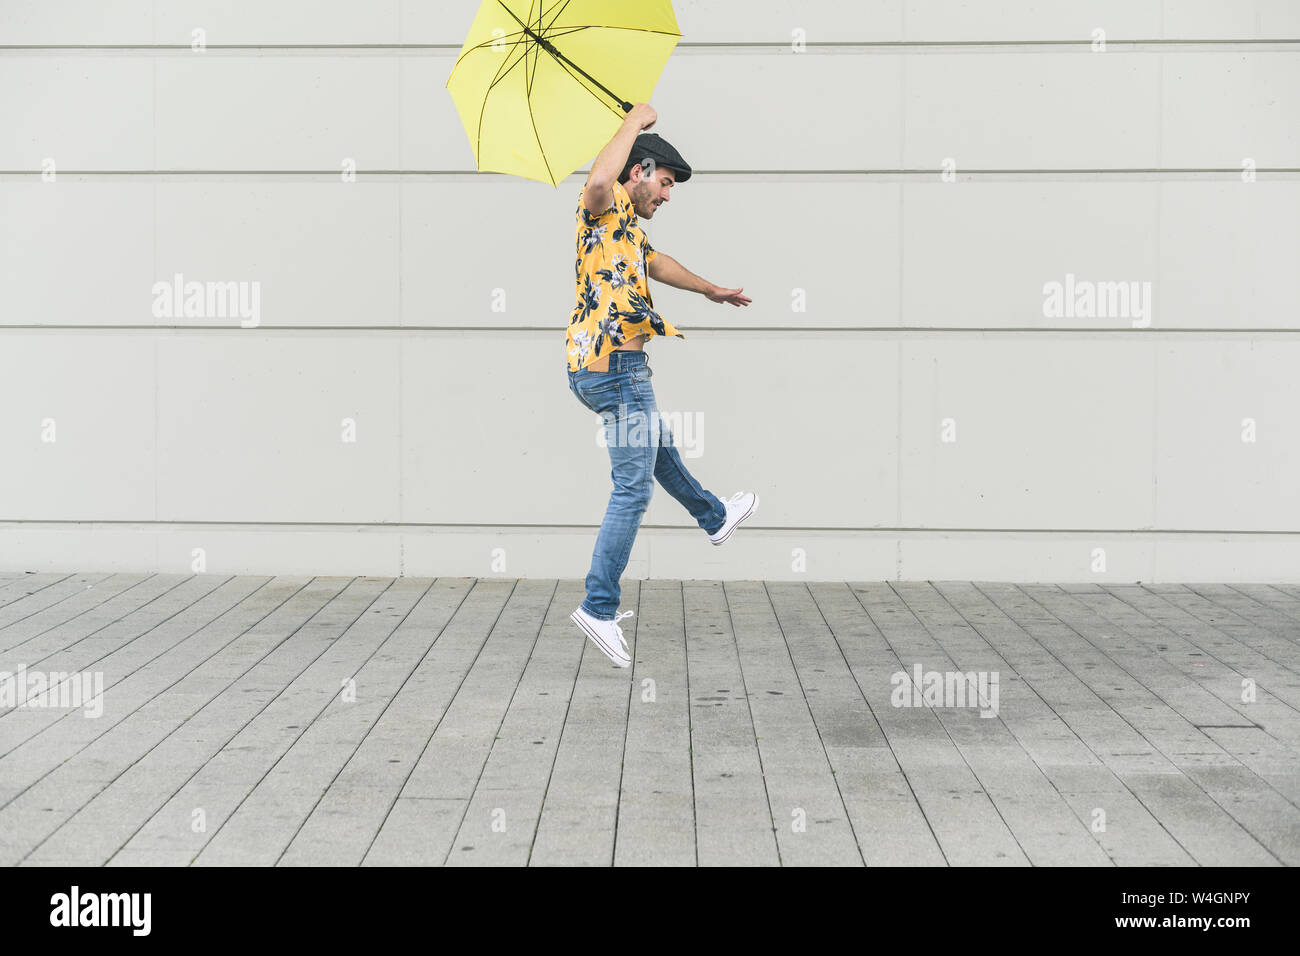 Young man with aloha shirt, dancing with yellow umbrella Stock Photo